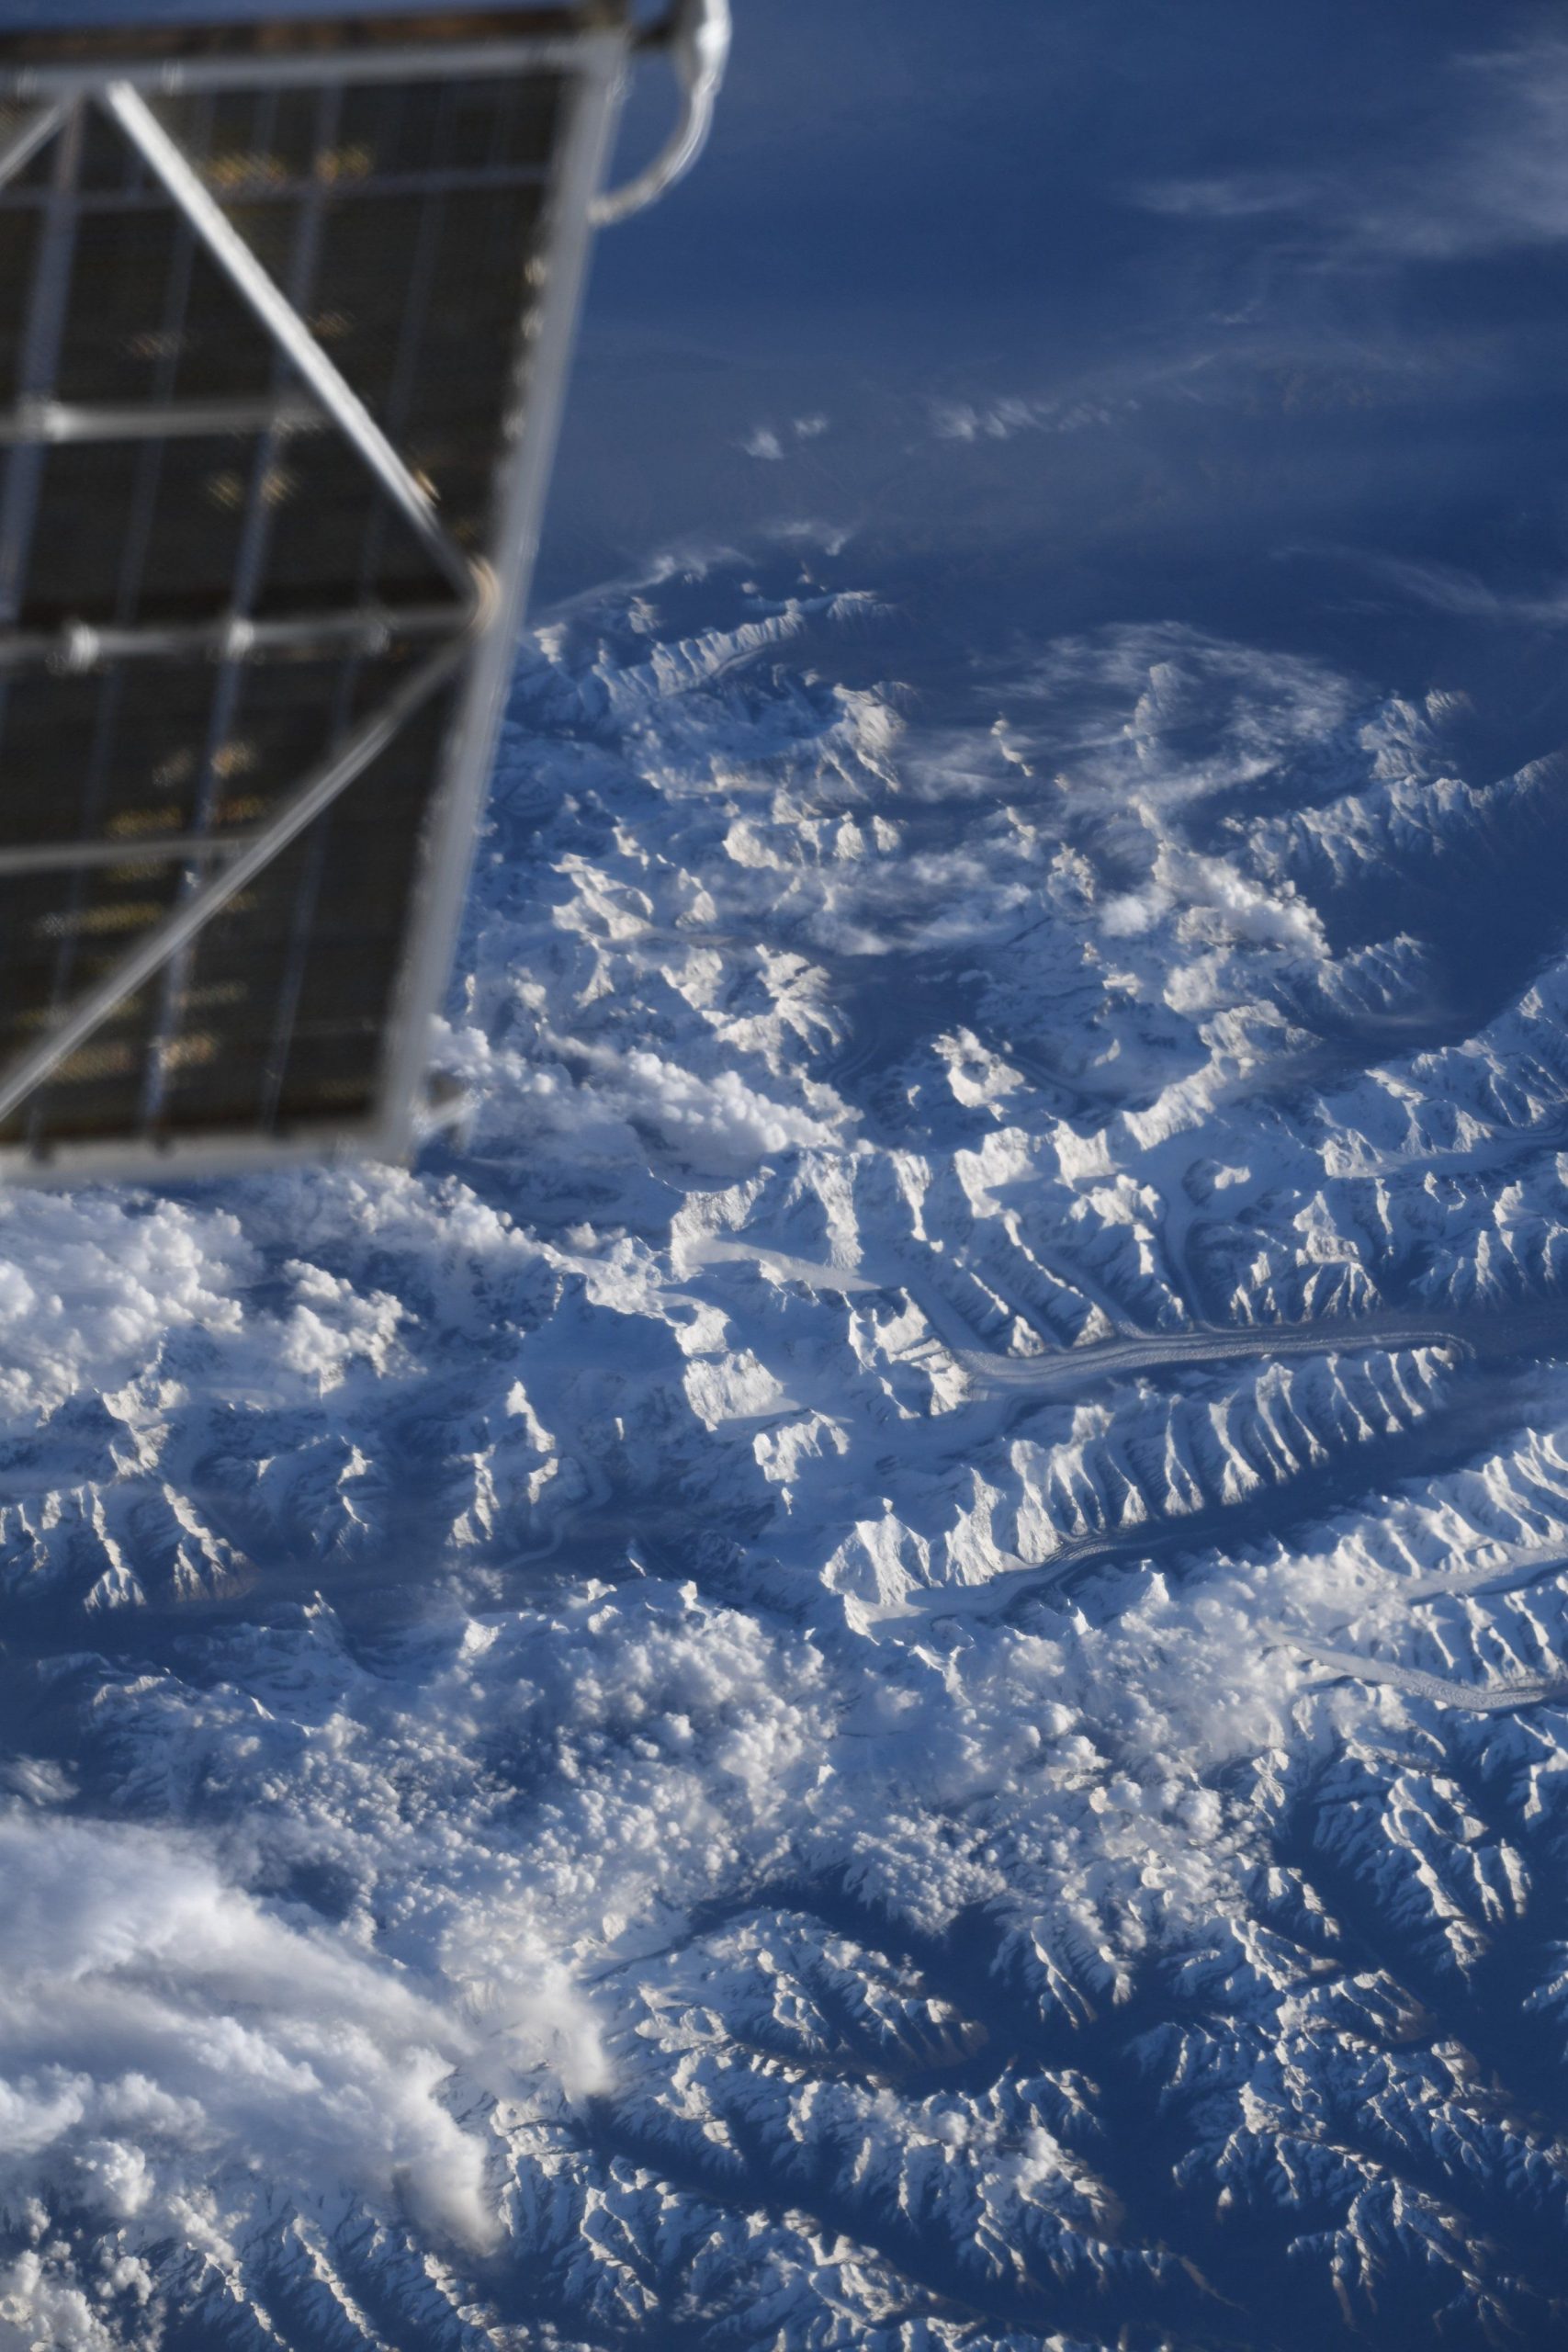 NASA photo of snow-clad Himalayas stirs souls, sets off ice-cream craving